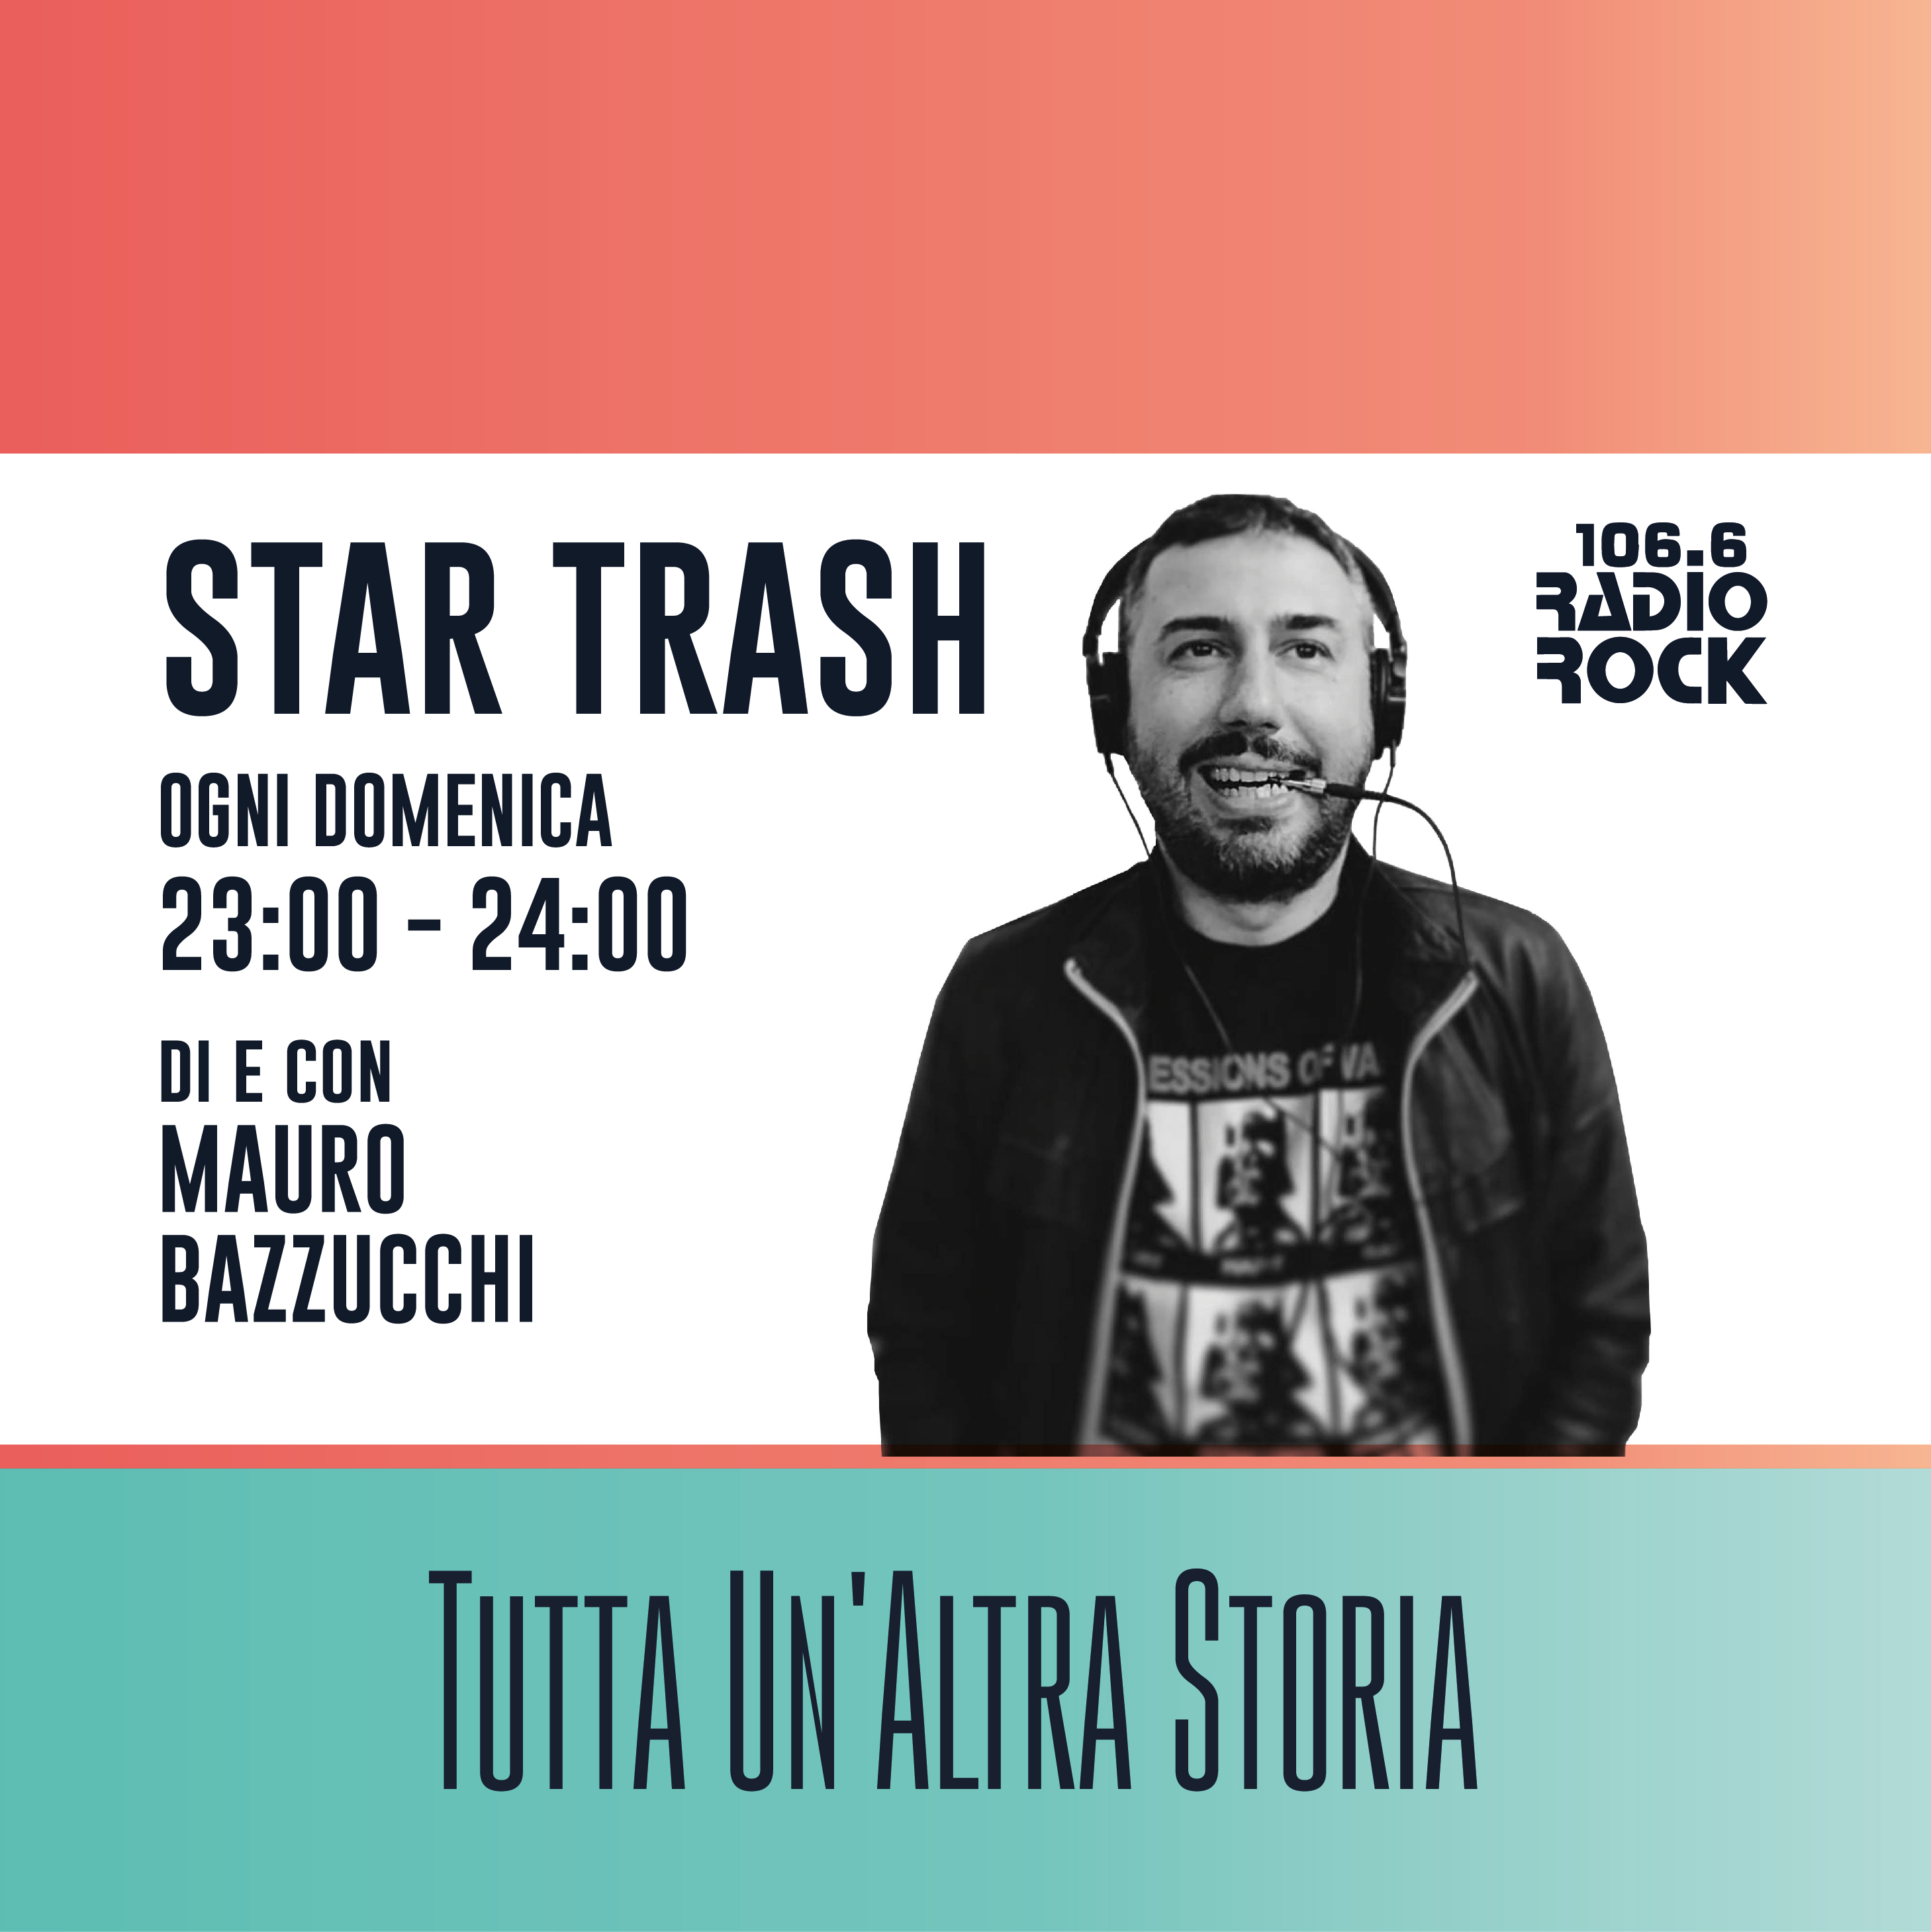 Star Trash: Musica trash, anzi trashissima (14-03-21)